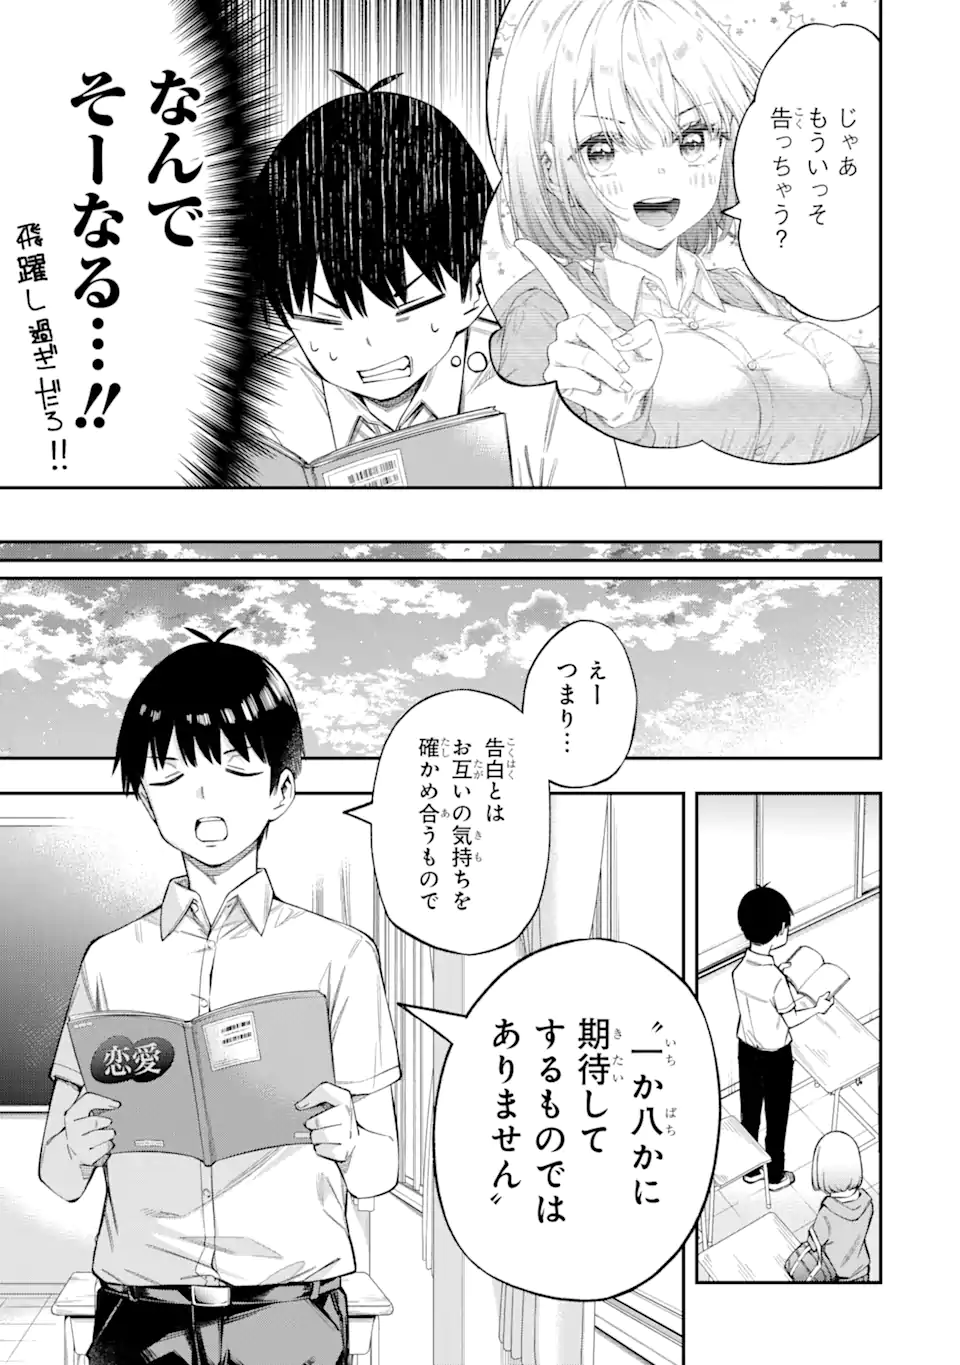 Renai no Jugyou - Chapter 2.1 - Page 6